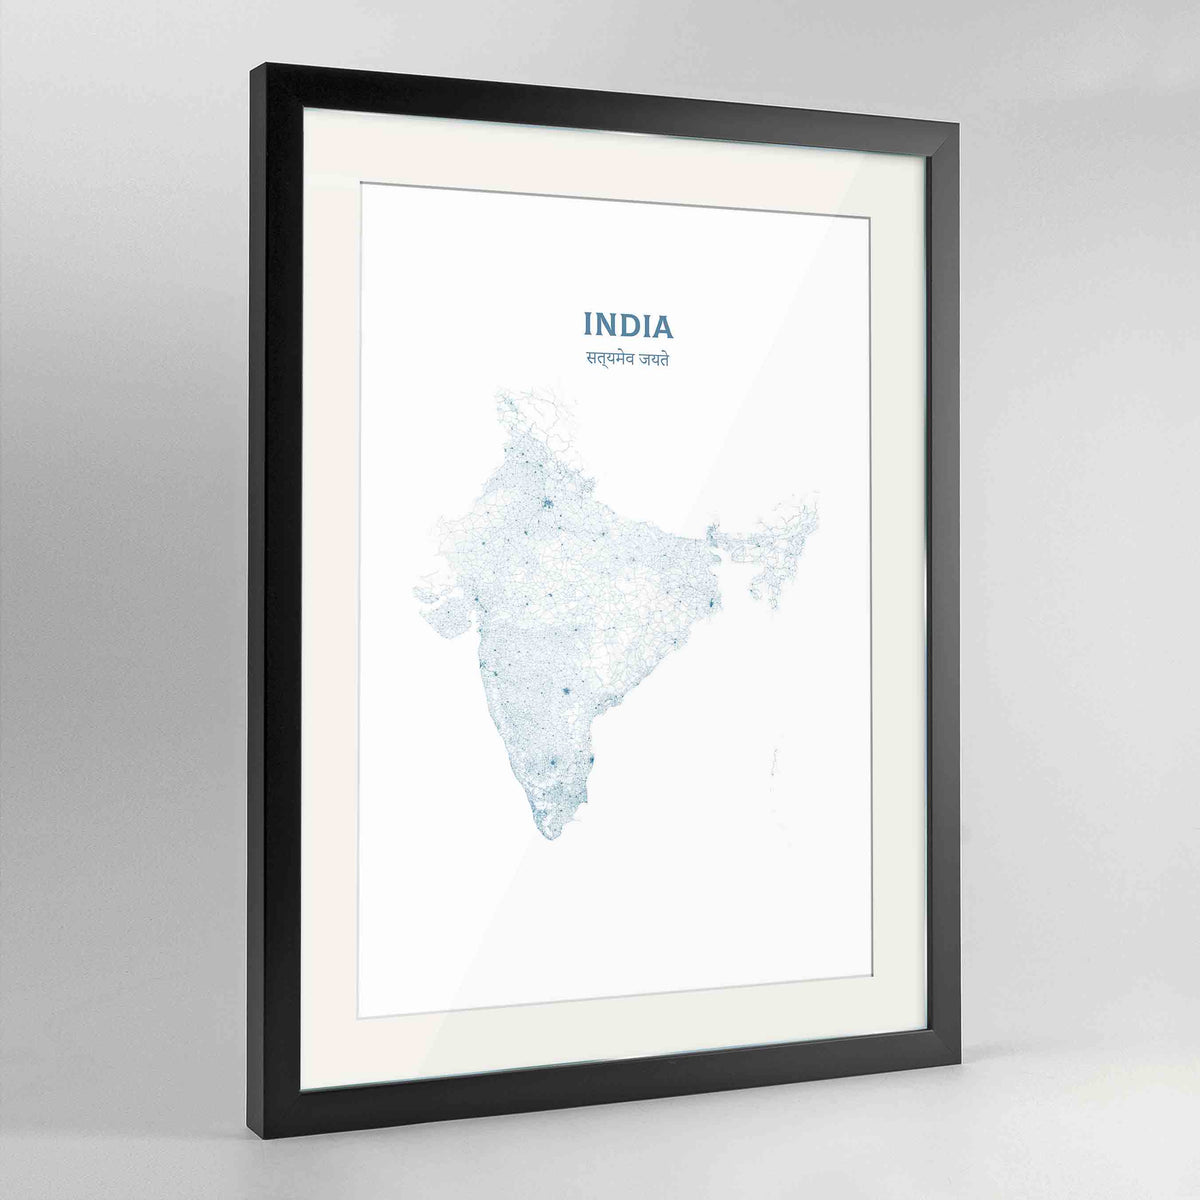 India - All Roads Art Print - Framed